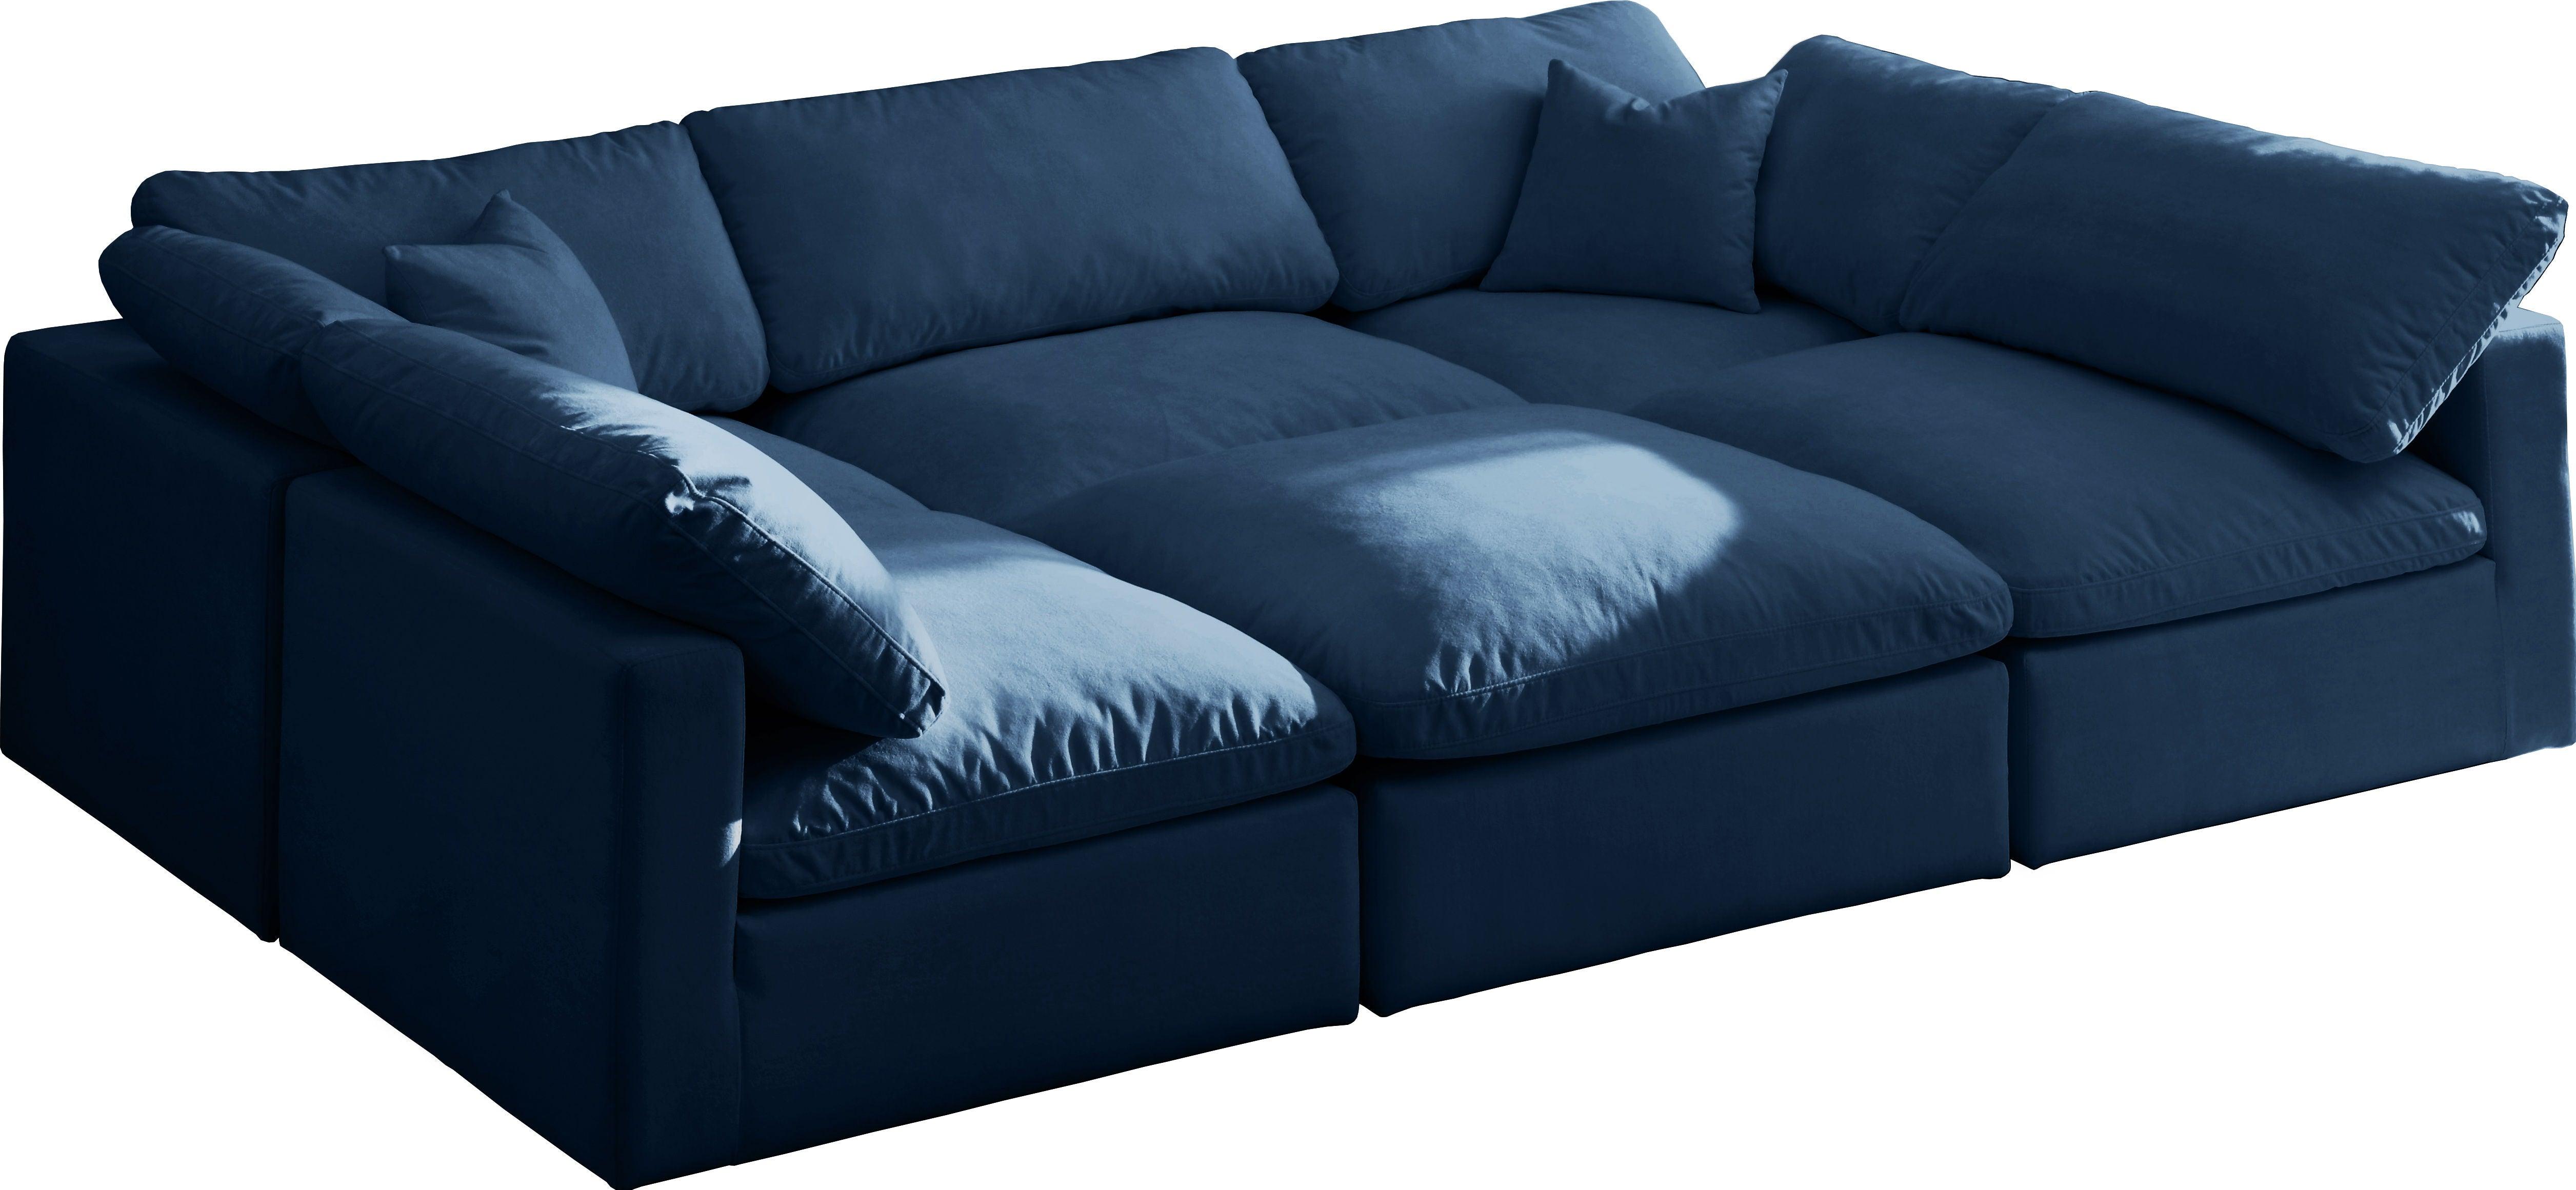 Meridian Furniture - Plush - Velvet Standart Comfort Modular Sectional - Navy - Fabric - 5th Avenue Furniture